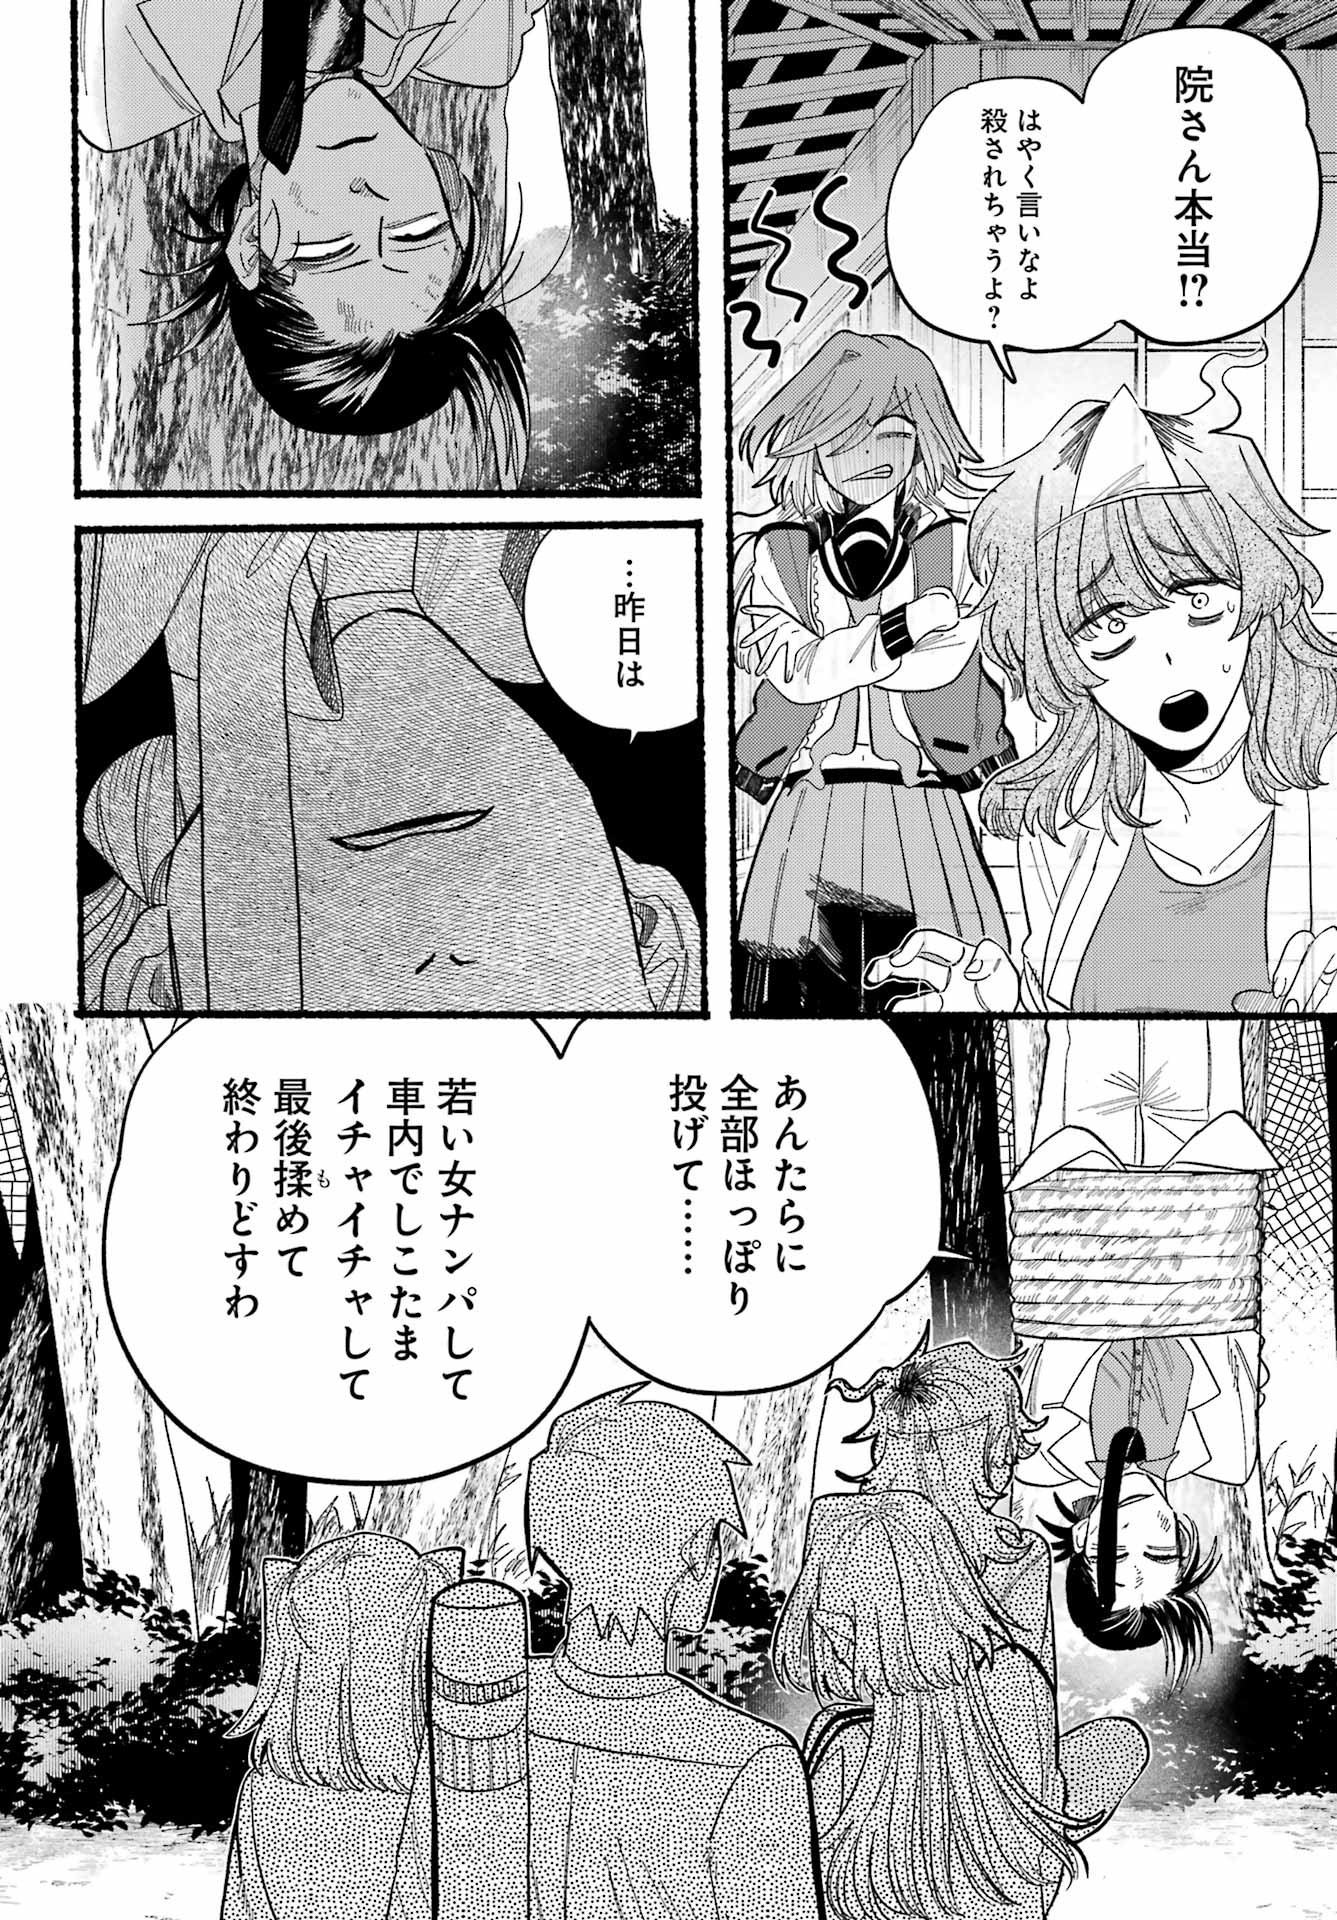 Rokurei - Tenseishi Rinne Kuyakusho Dairokkanbu Joreika Katsudouki - Chapter 10 - Page 18